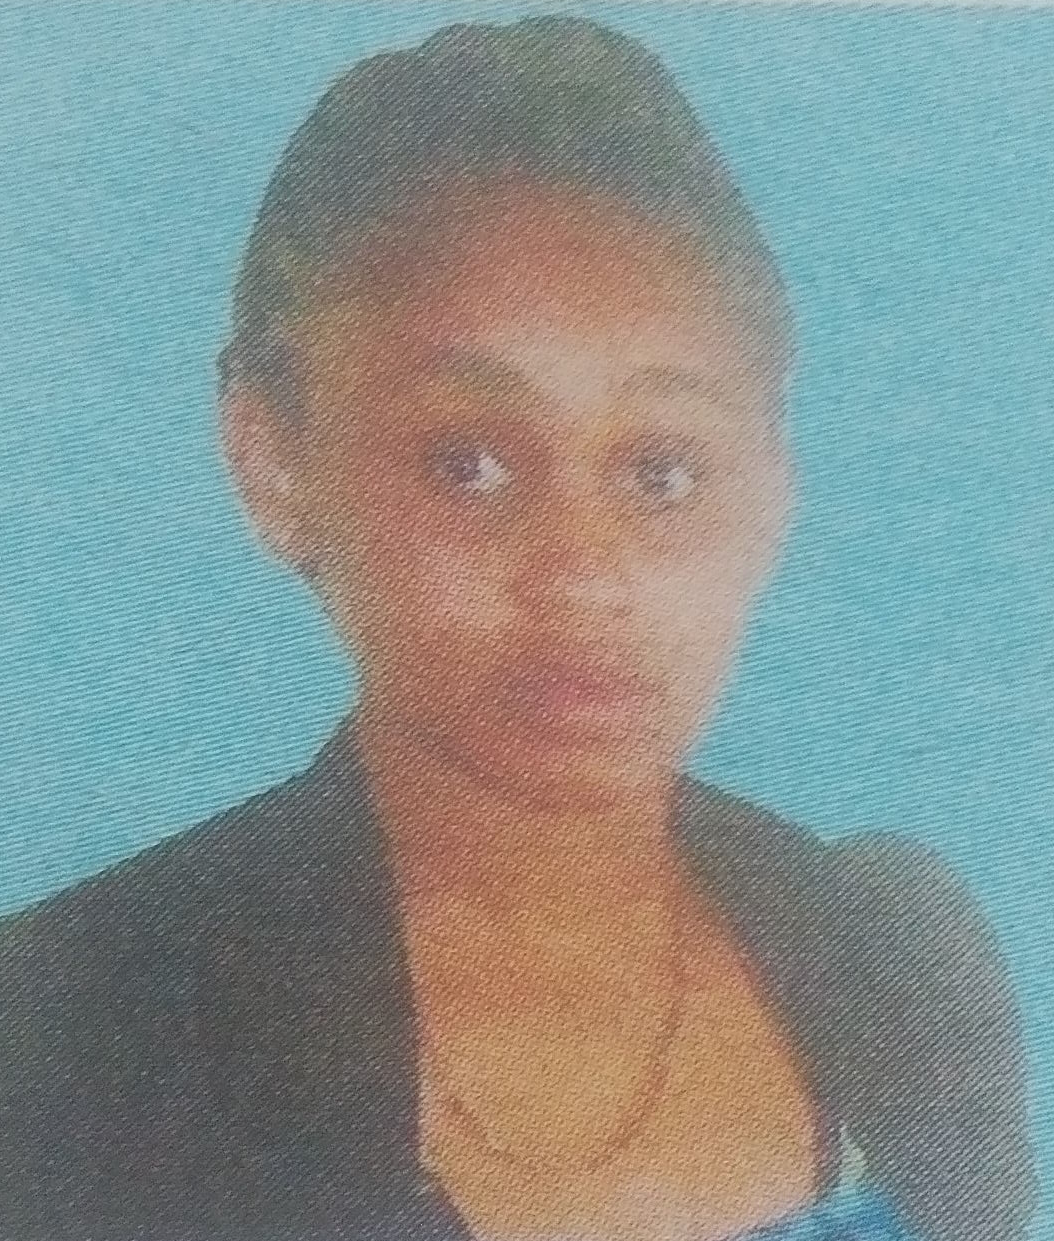 Obituary Image of Caroline Njihia Njoroge